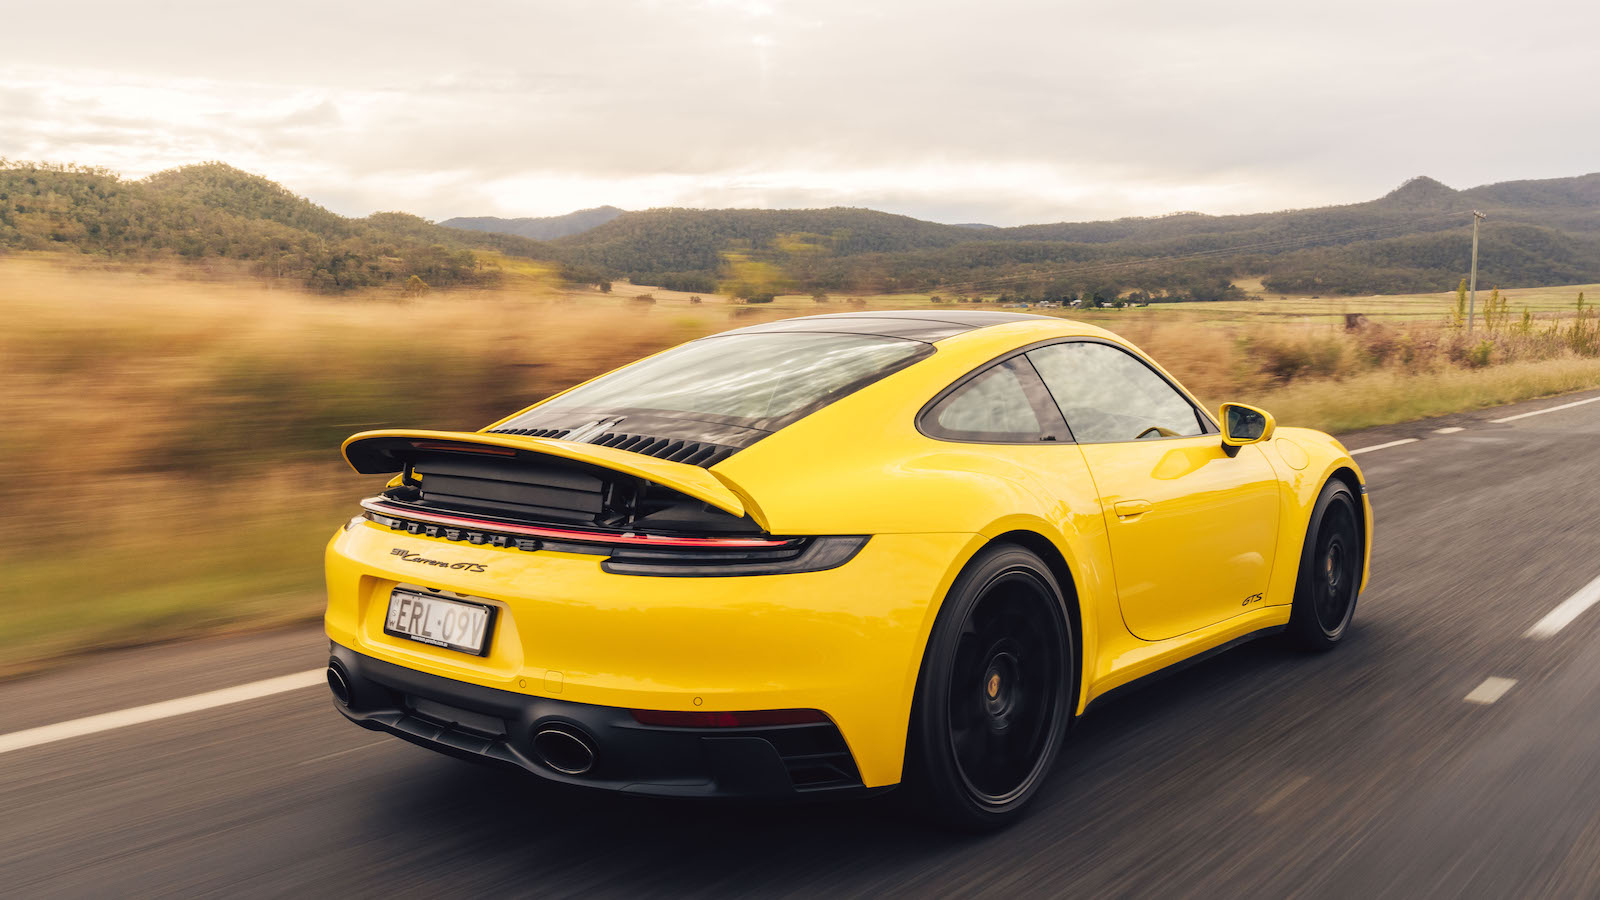 Porsche 911 GTS Review: The Perfect ‘Sweet Spot’ Sports Car